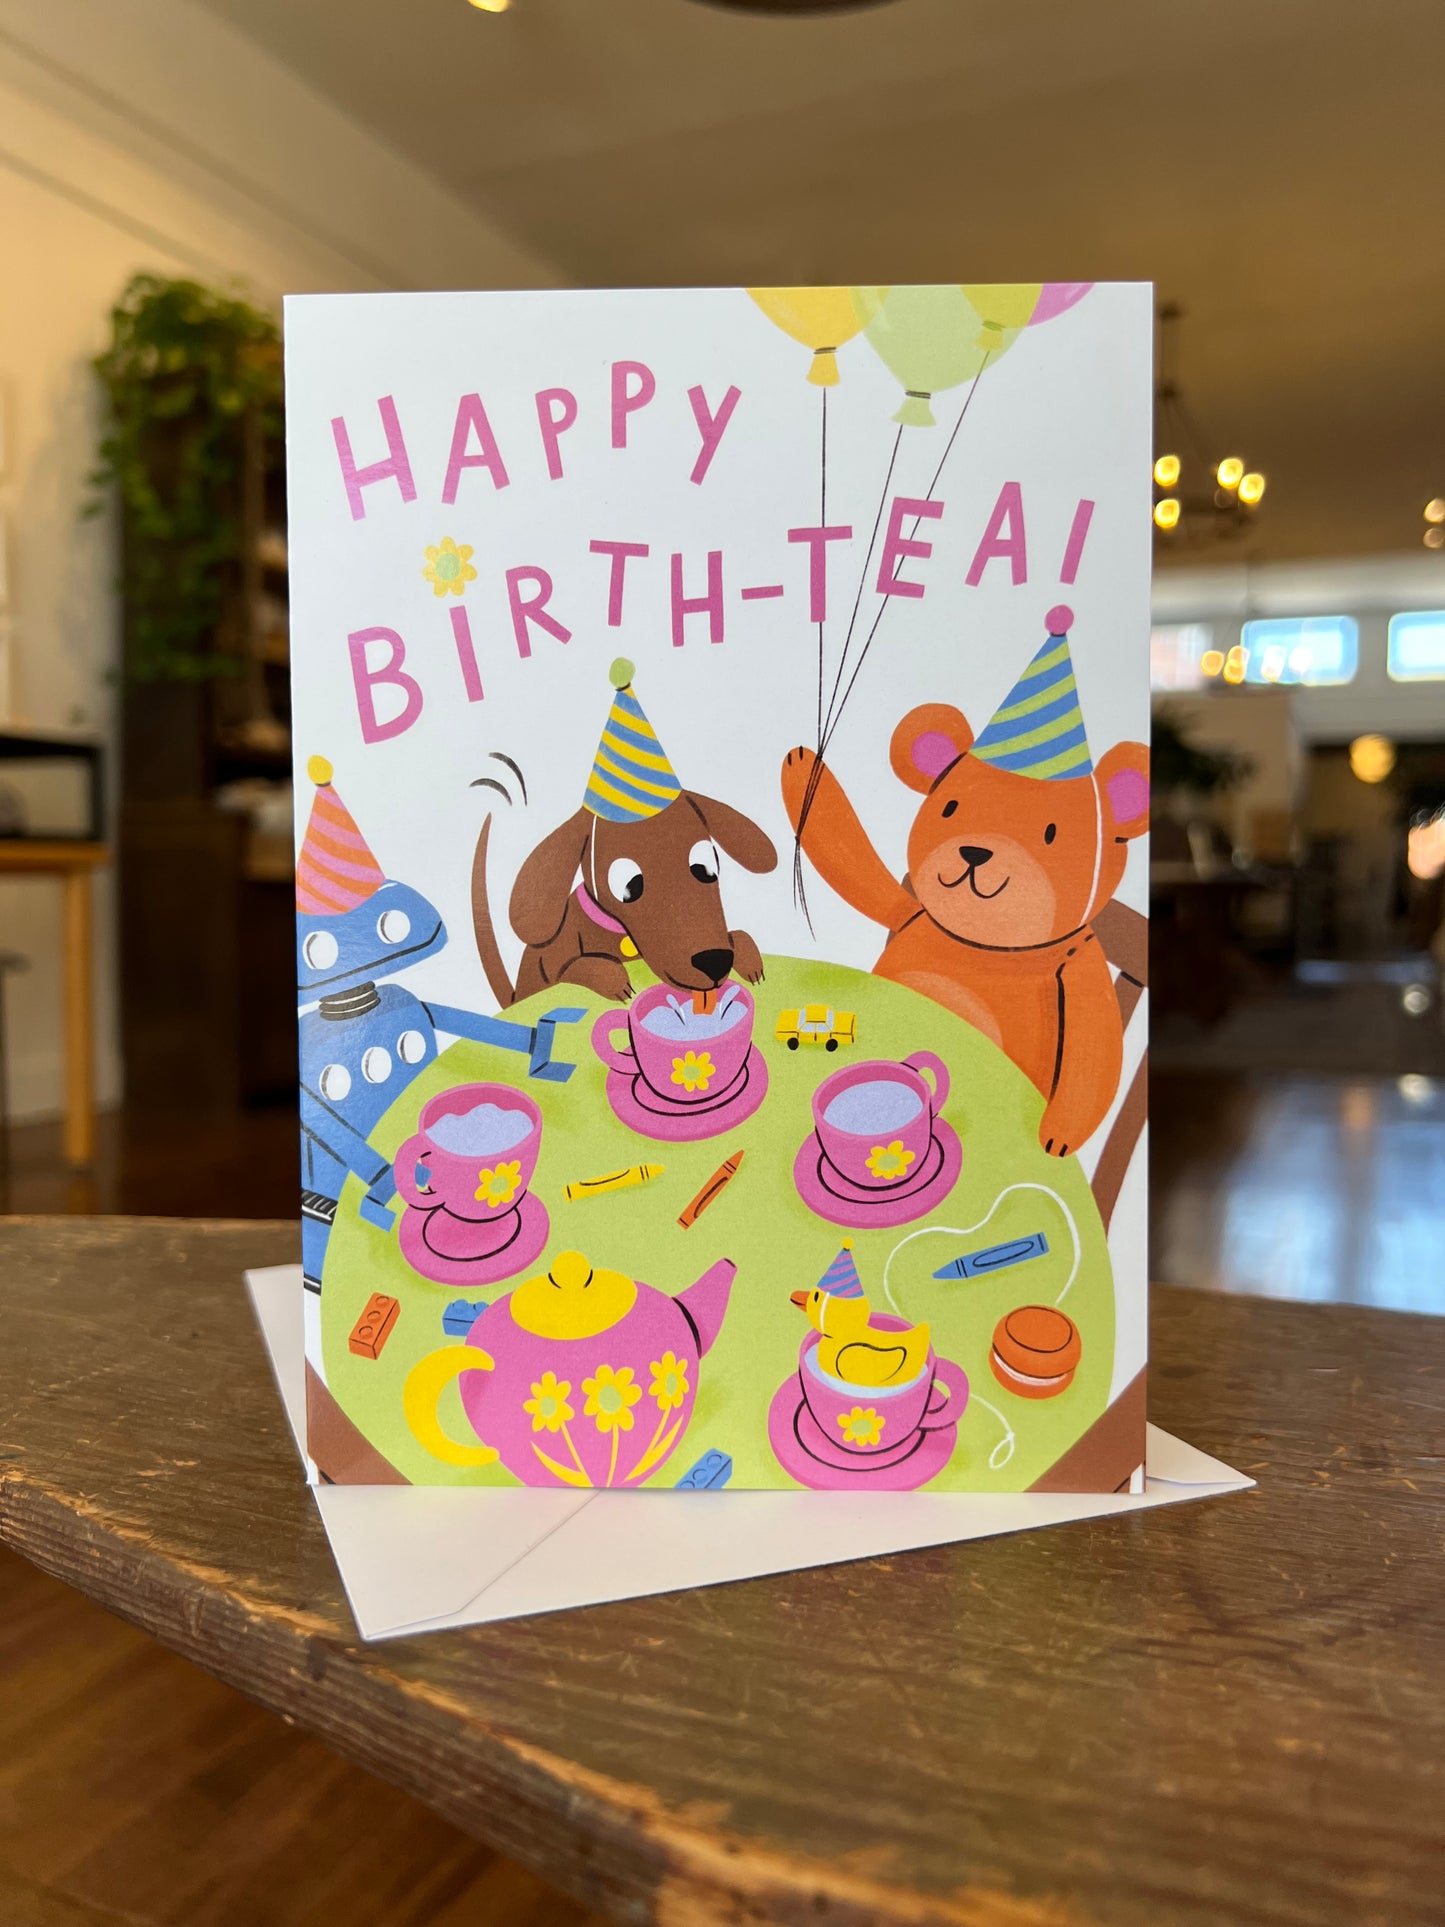 Happy Birth-Tea Greeting Card